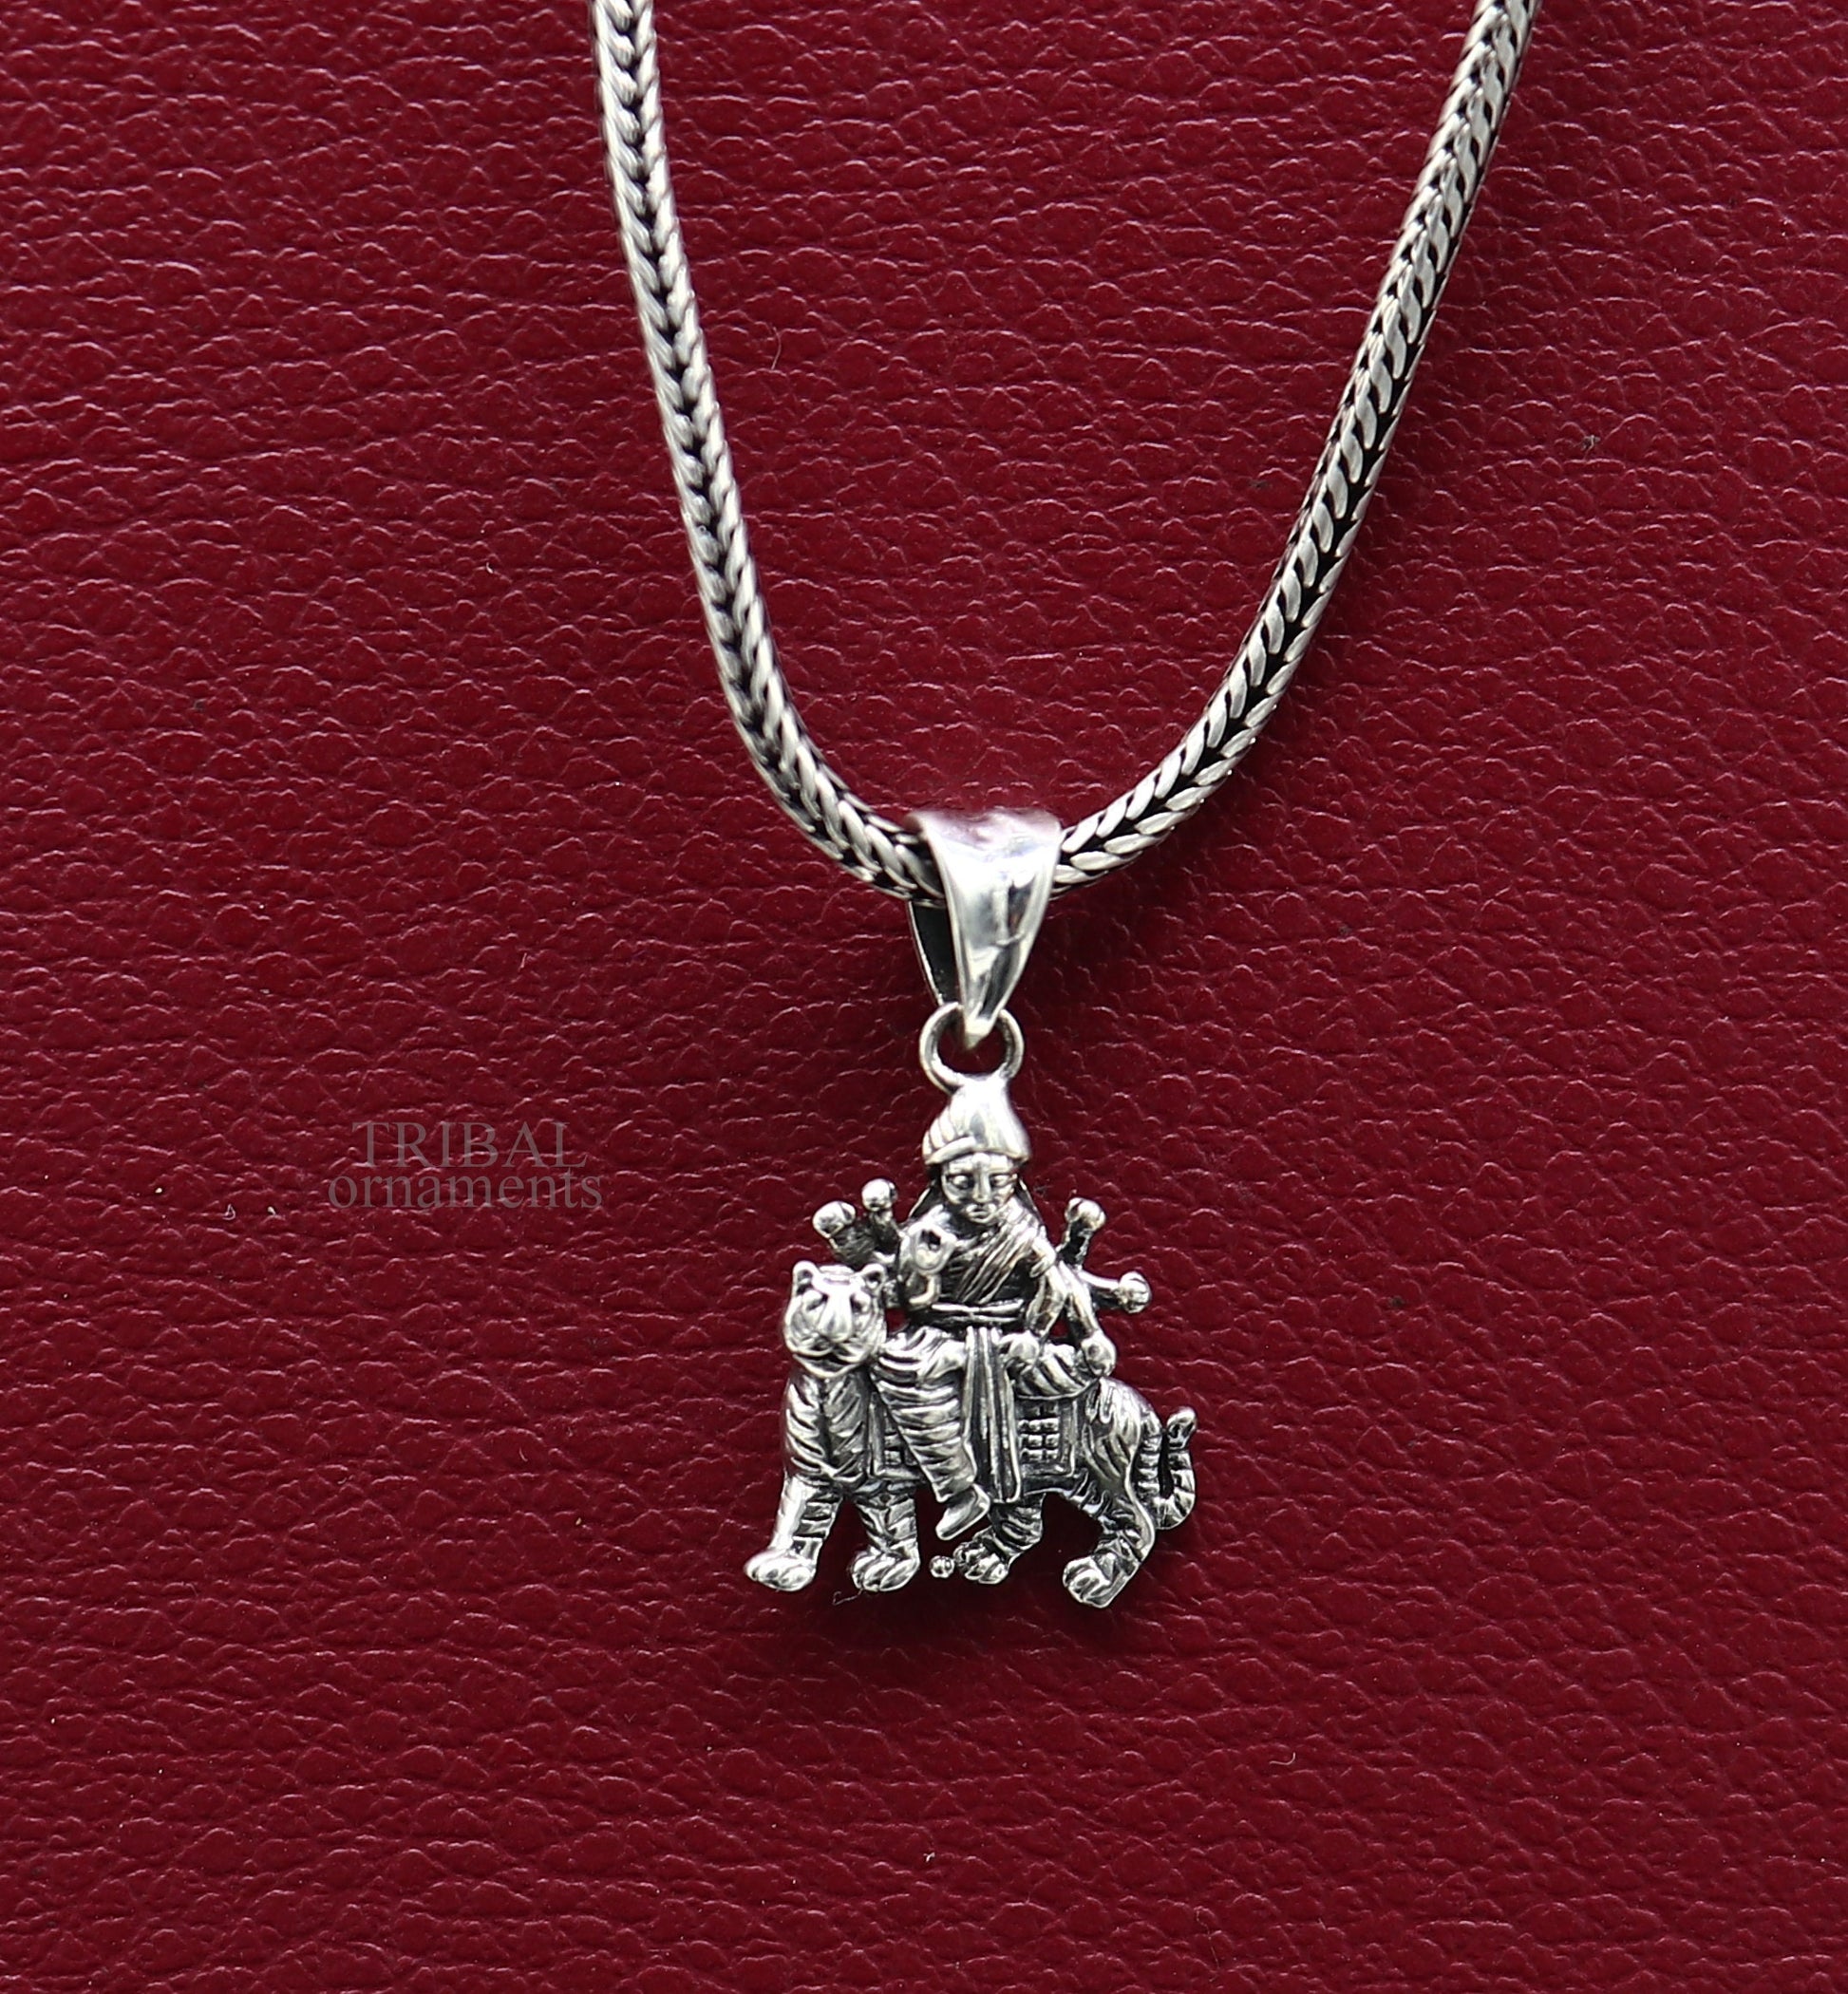 Divine 925 sterling silver blessing Goddess bhawani/ Durga mataji pendant, amazing unisex pendant locket goddess tribal jewelry ssp1683 - TRIBAL ORNAMENTS